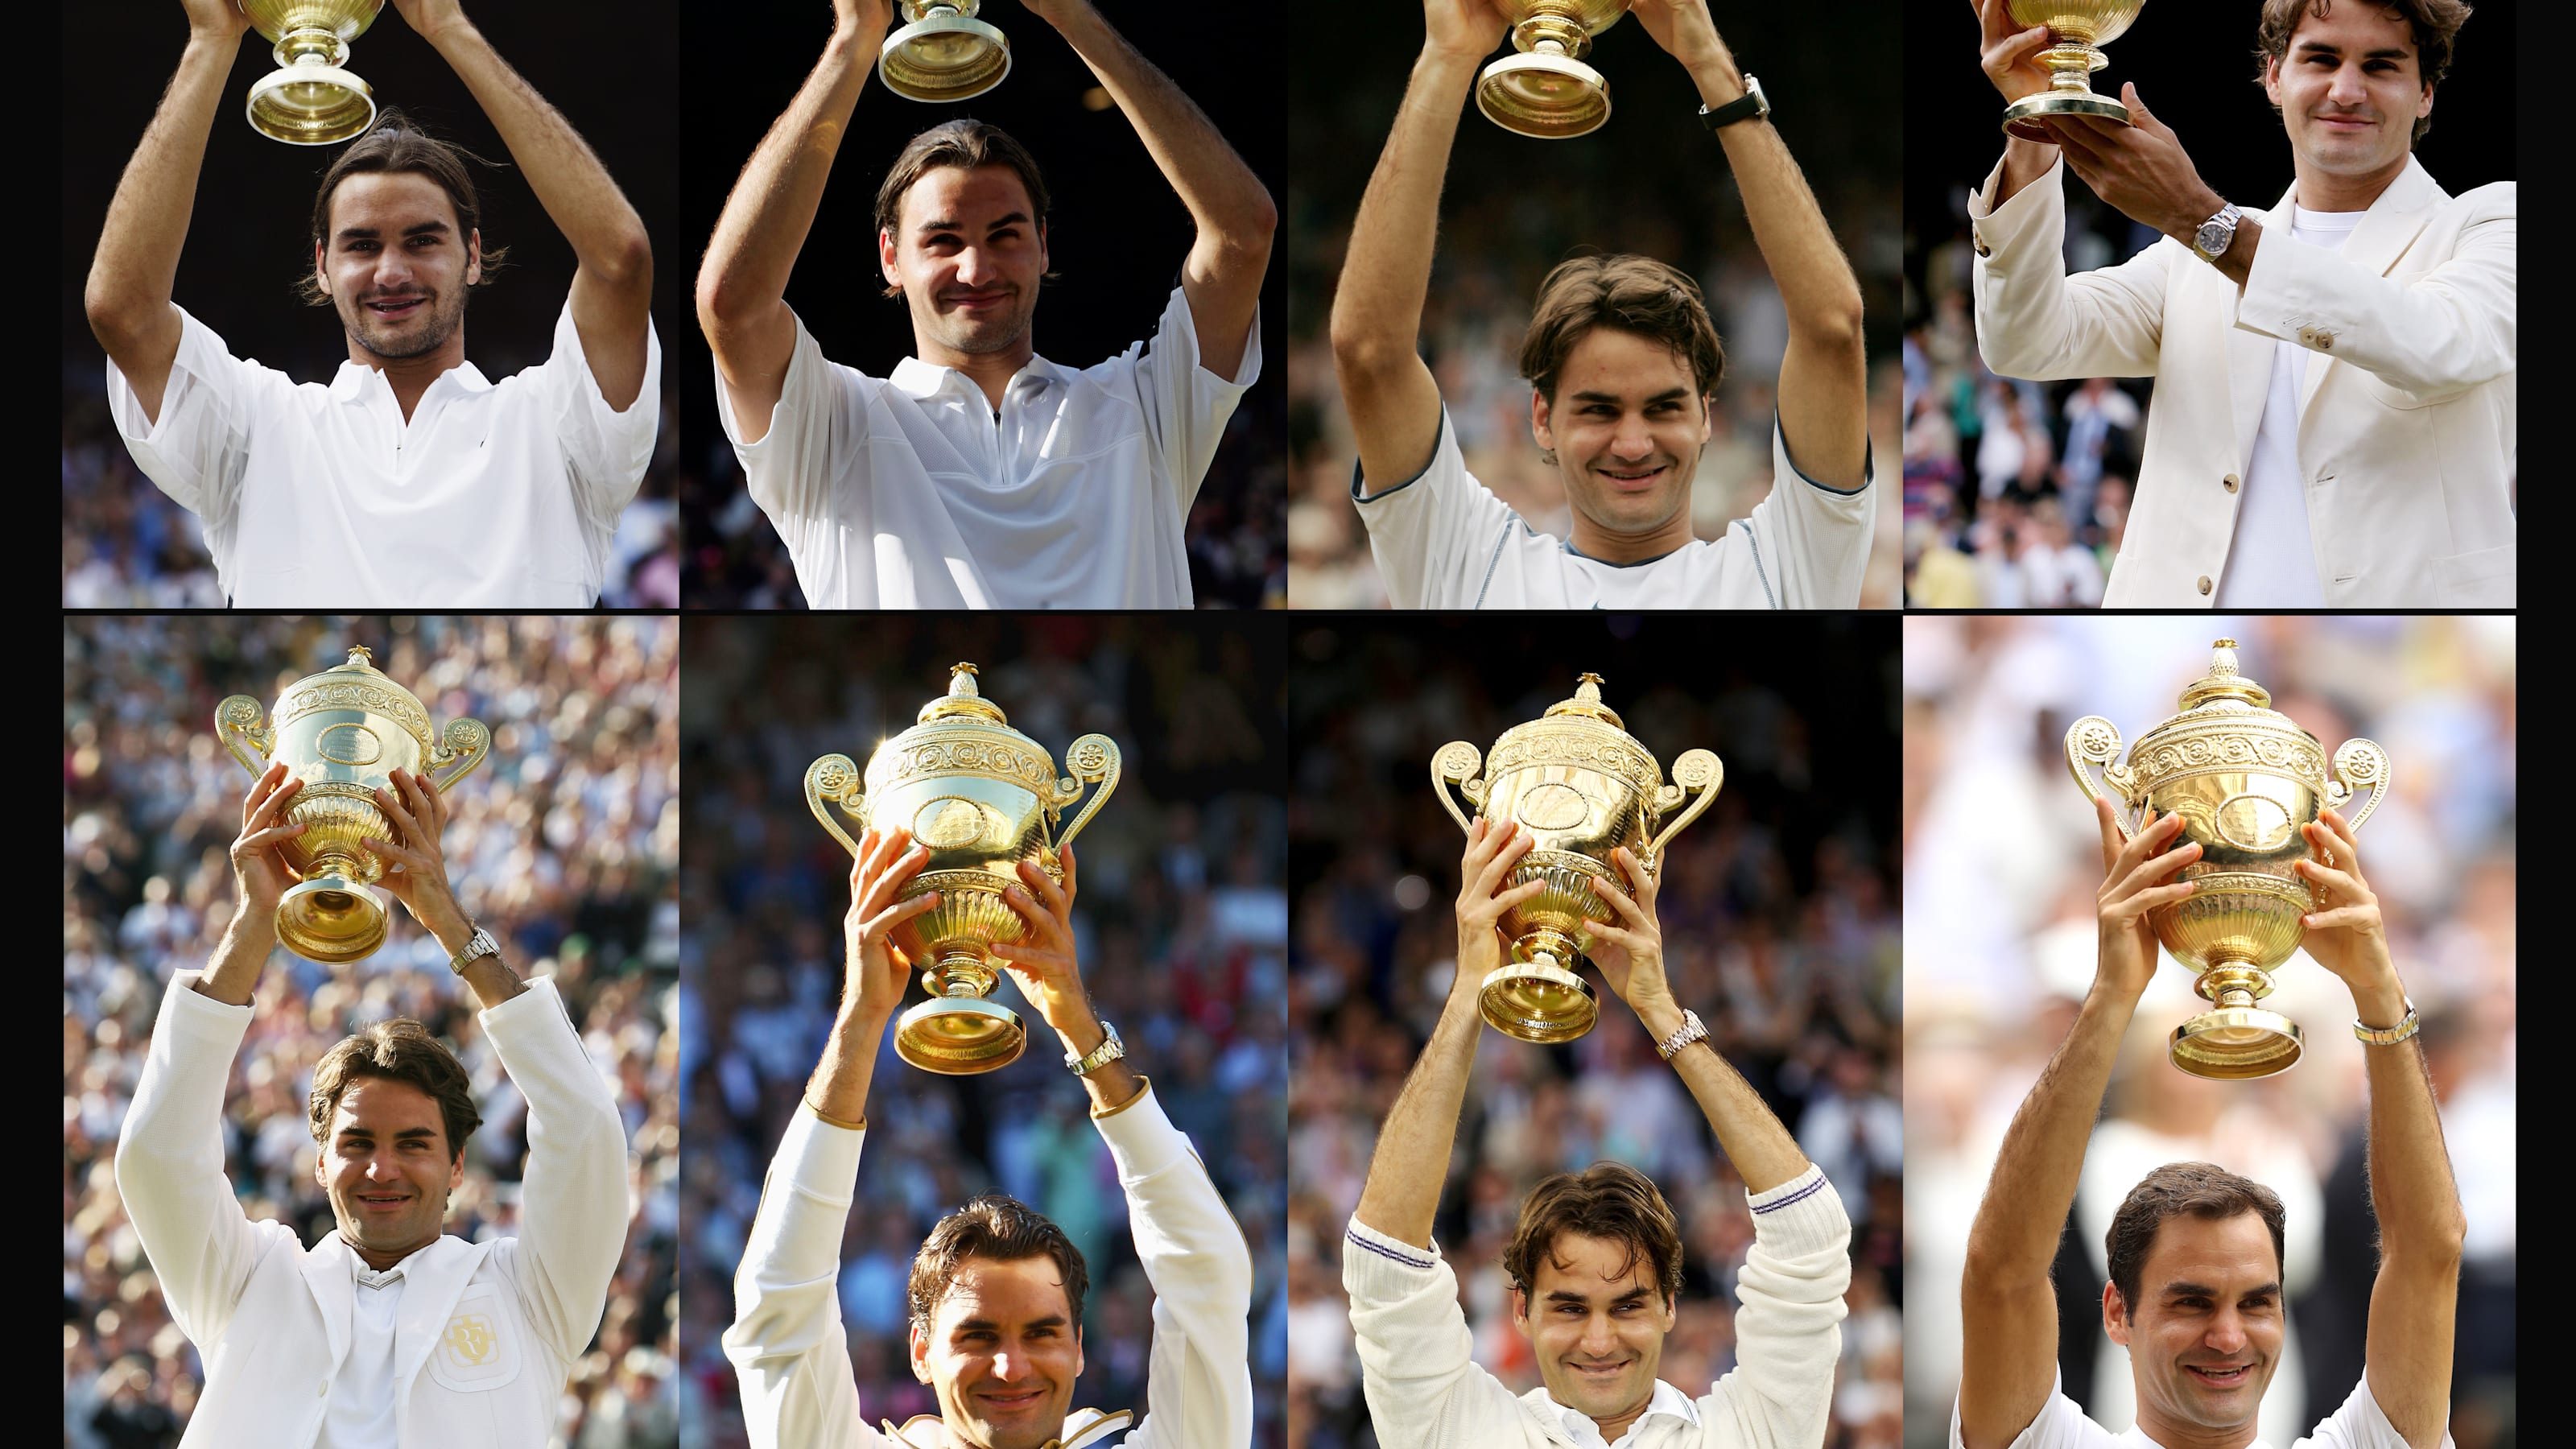 How many Wimbledon titles has Roger won?